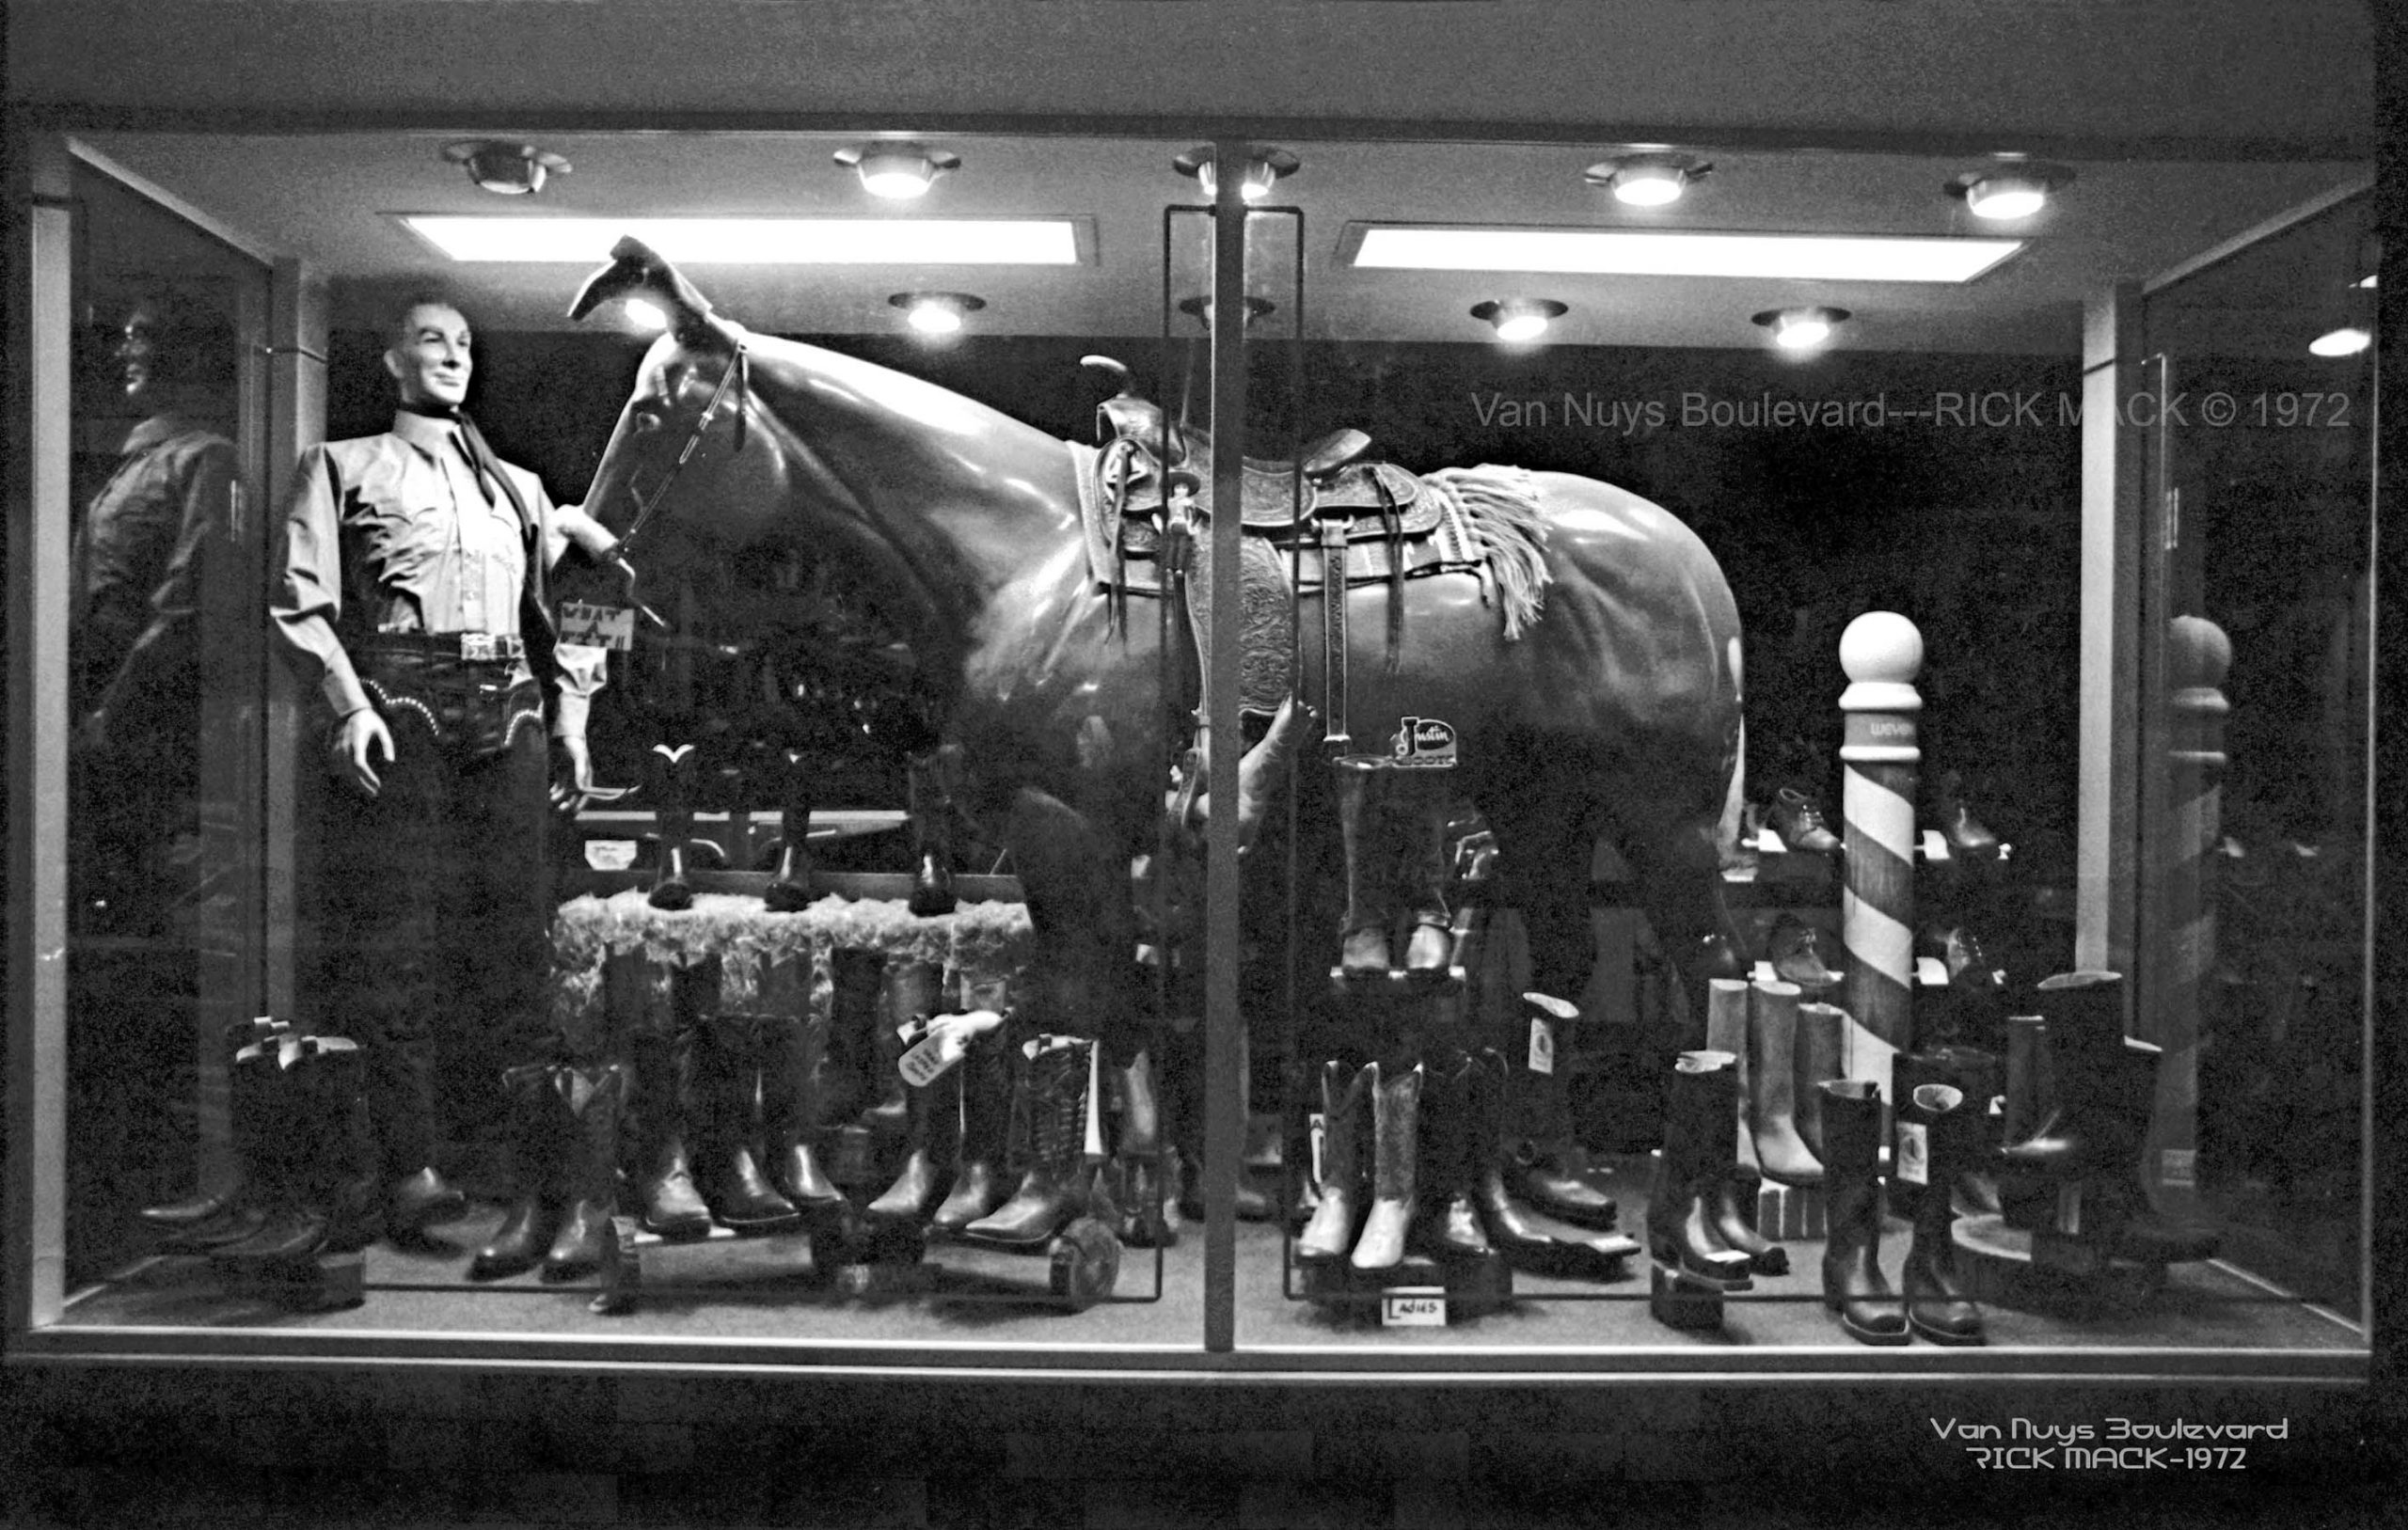 rick mccloskey; van nuys boulevard 1972; western wear store; mannequin; horse; riding boots